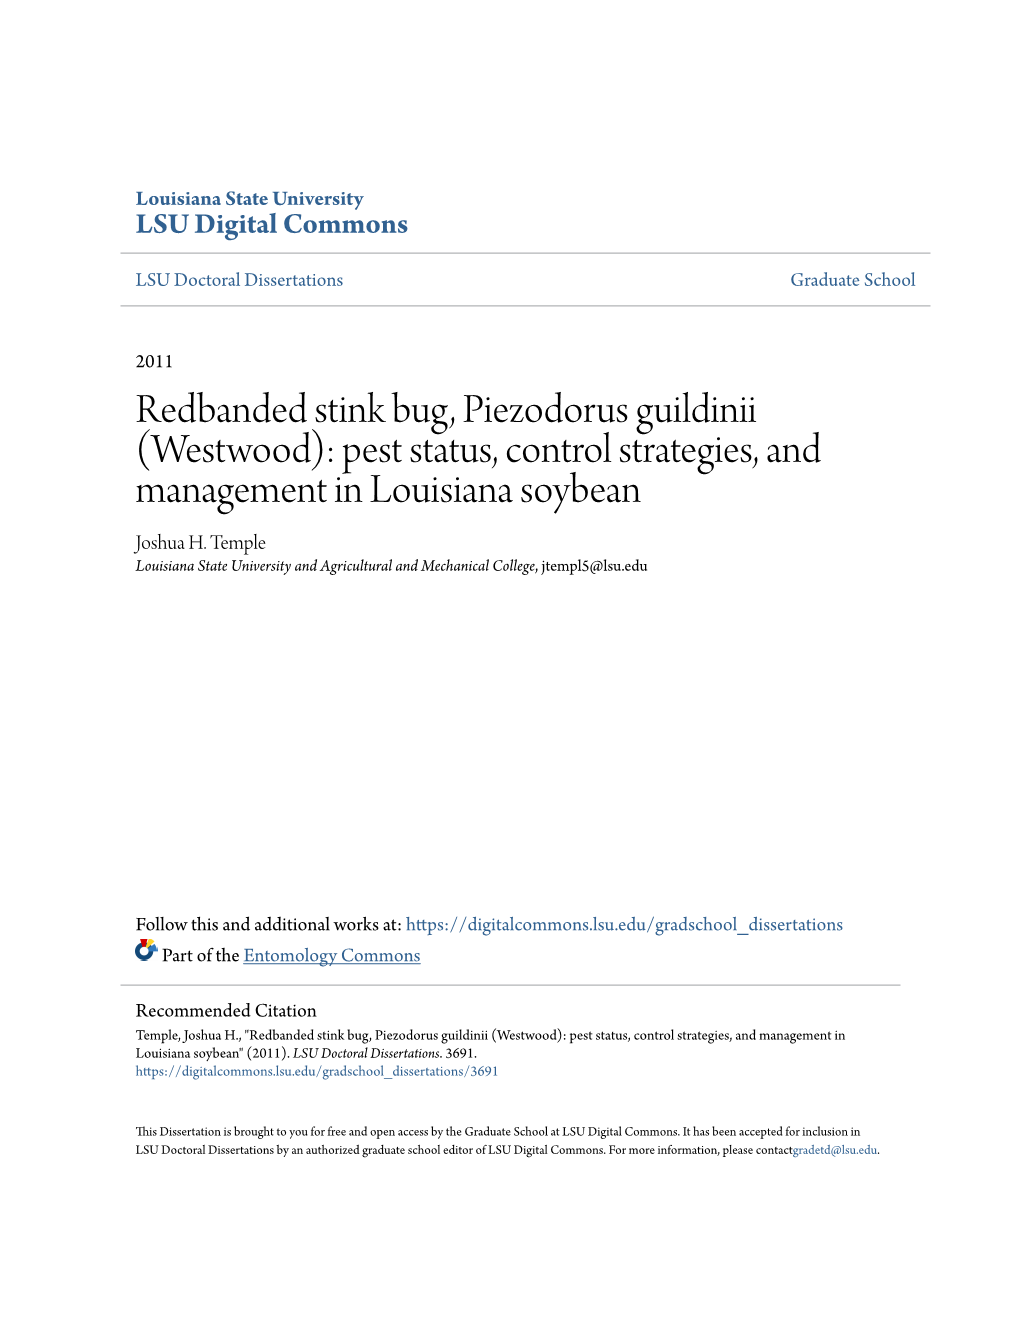 Redbanded Stink Bug, Piezodorus Guildinii (Westwood): Pest Status, Control Strategies, and Management in Louisiana Soybean Joshua H